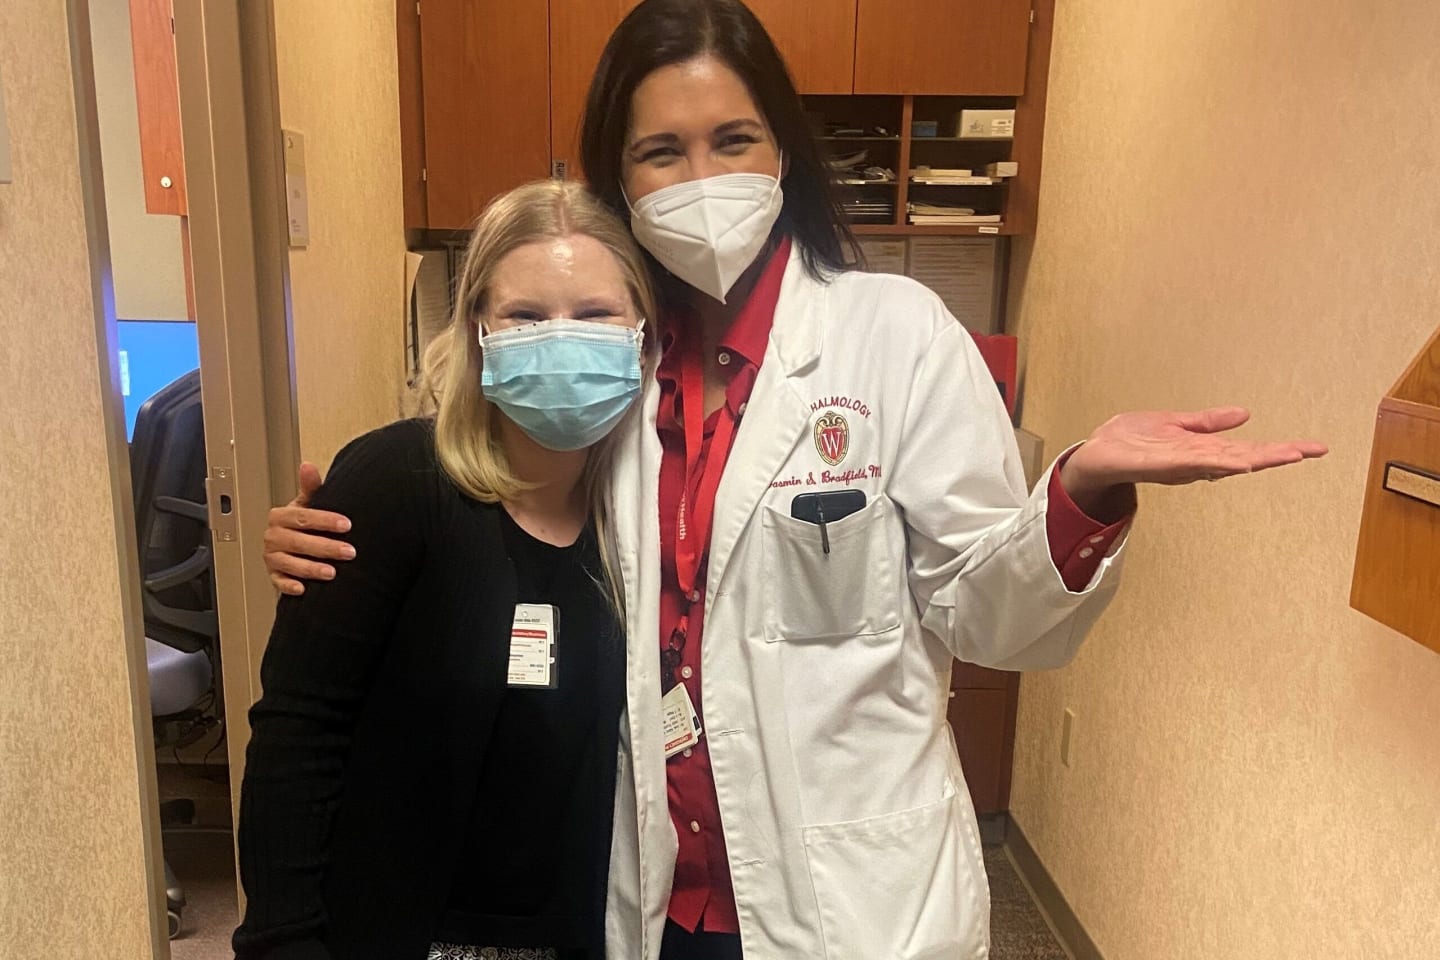 Veronica Blumer and Doctor Yasmin Bradfield standing in a hallway, wearing face masks